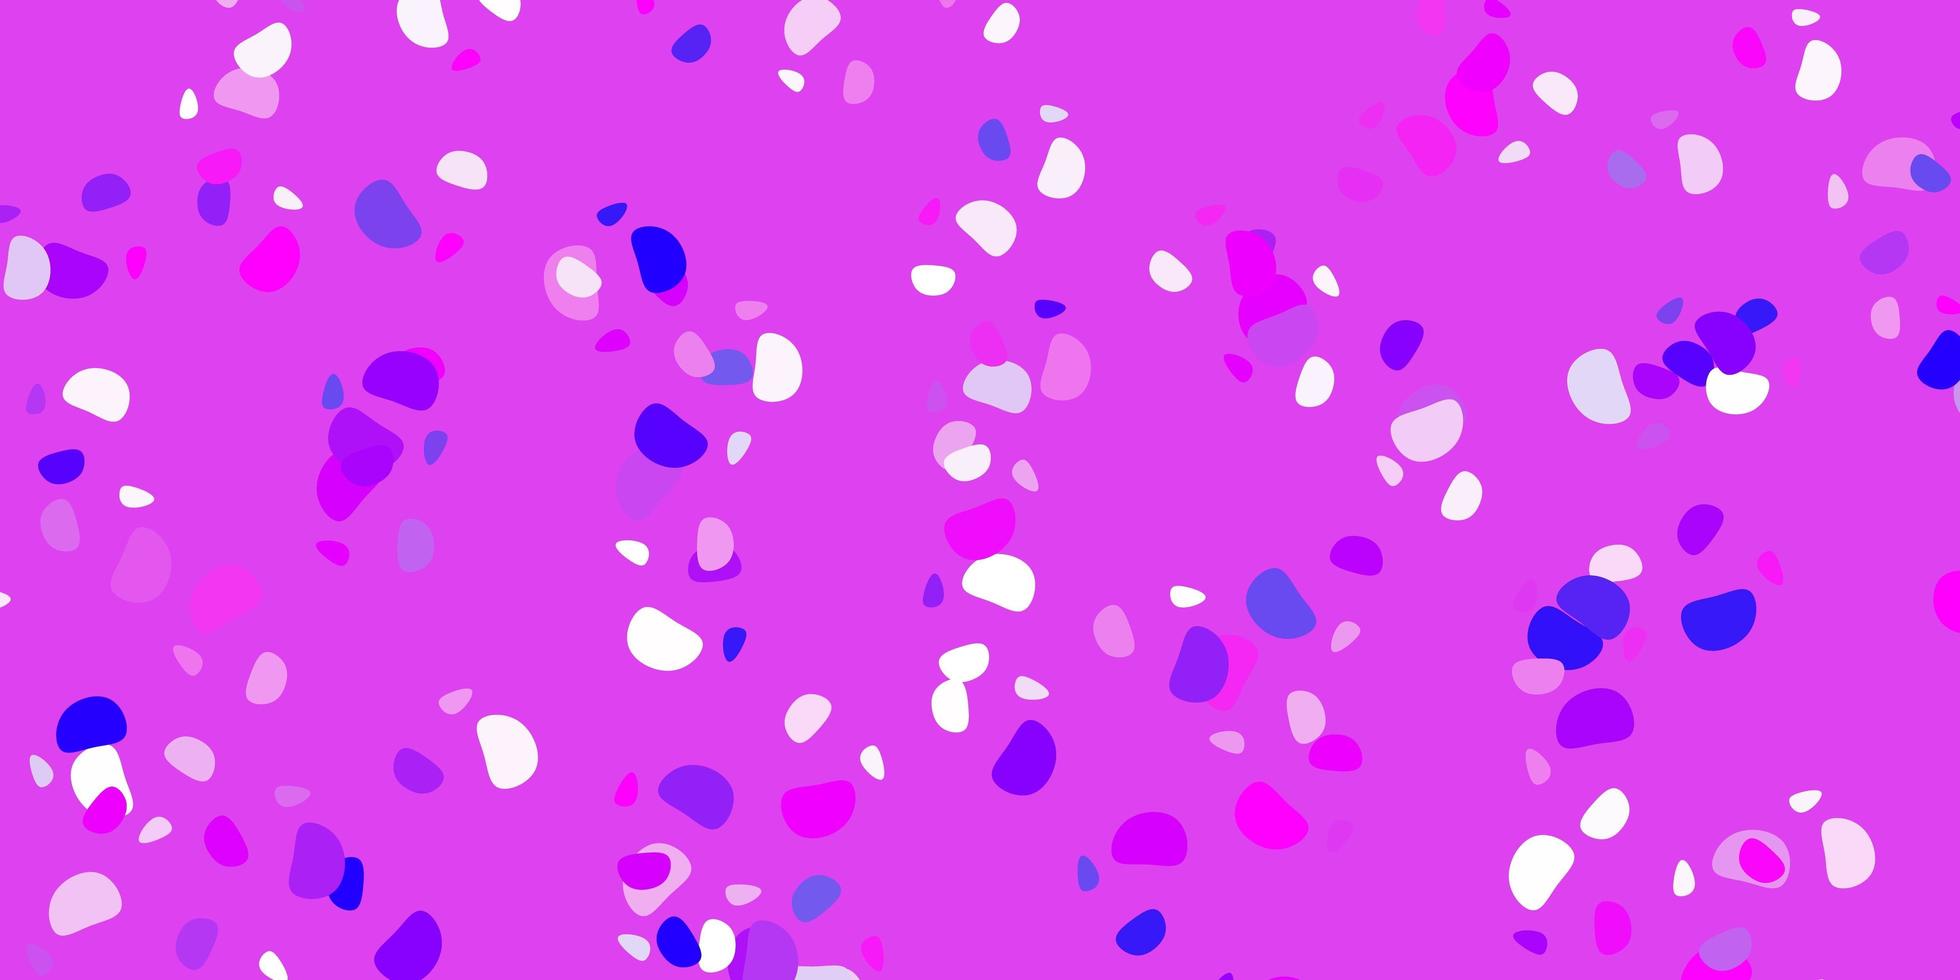 textura de vector violeta claro, rosa con formas de memphis.